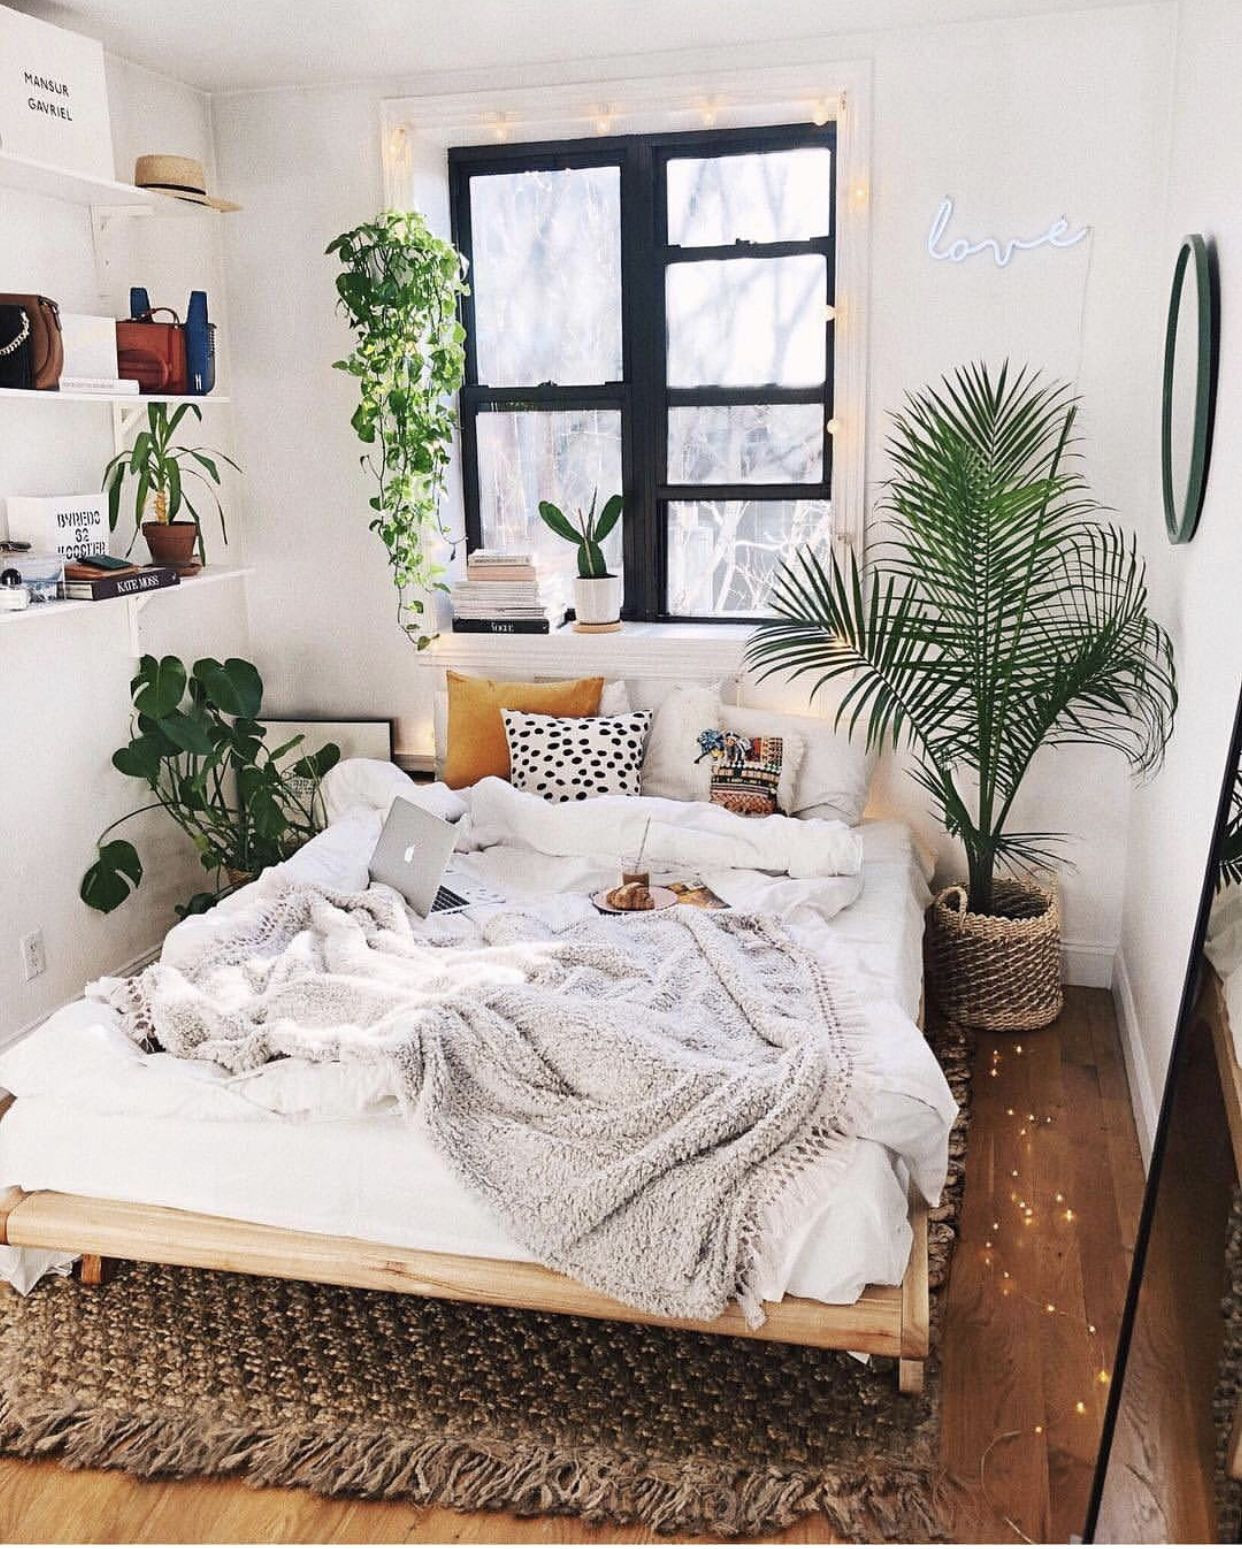 Small Bedroom Plants
 Minimalist Bedroom With Plants Dream Bedroom In 2019